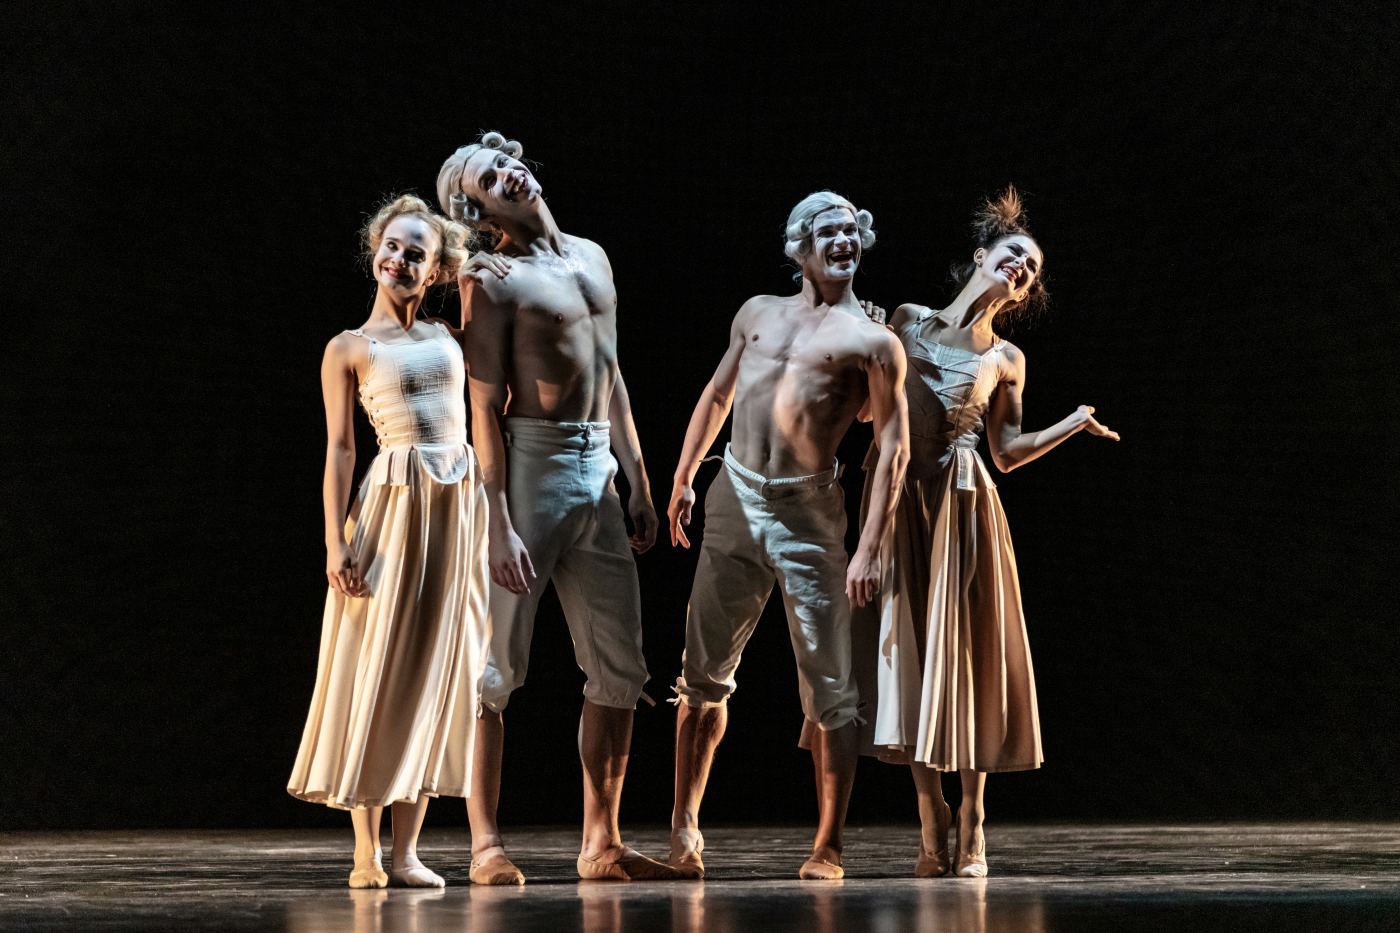 13. A.Novotná, F.Roach, V.Burlac, and I.Burduja, “Six Dances” by J.Kylián, Czech National Ballet 2022